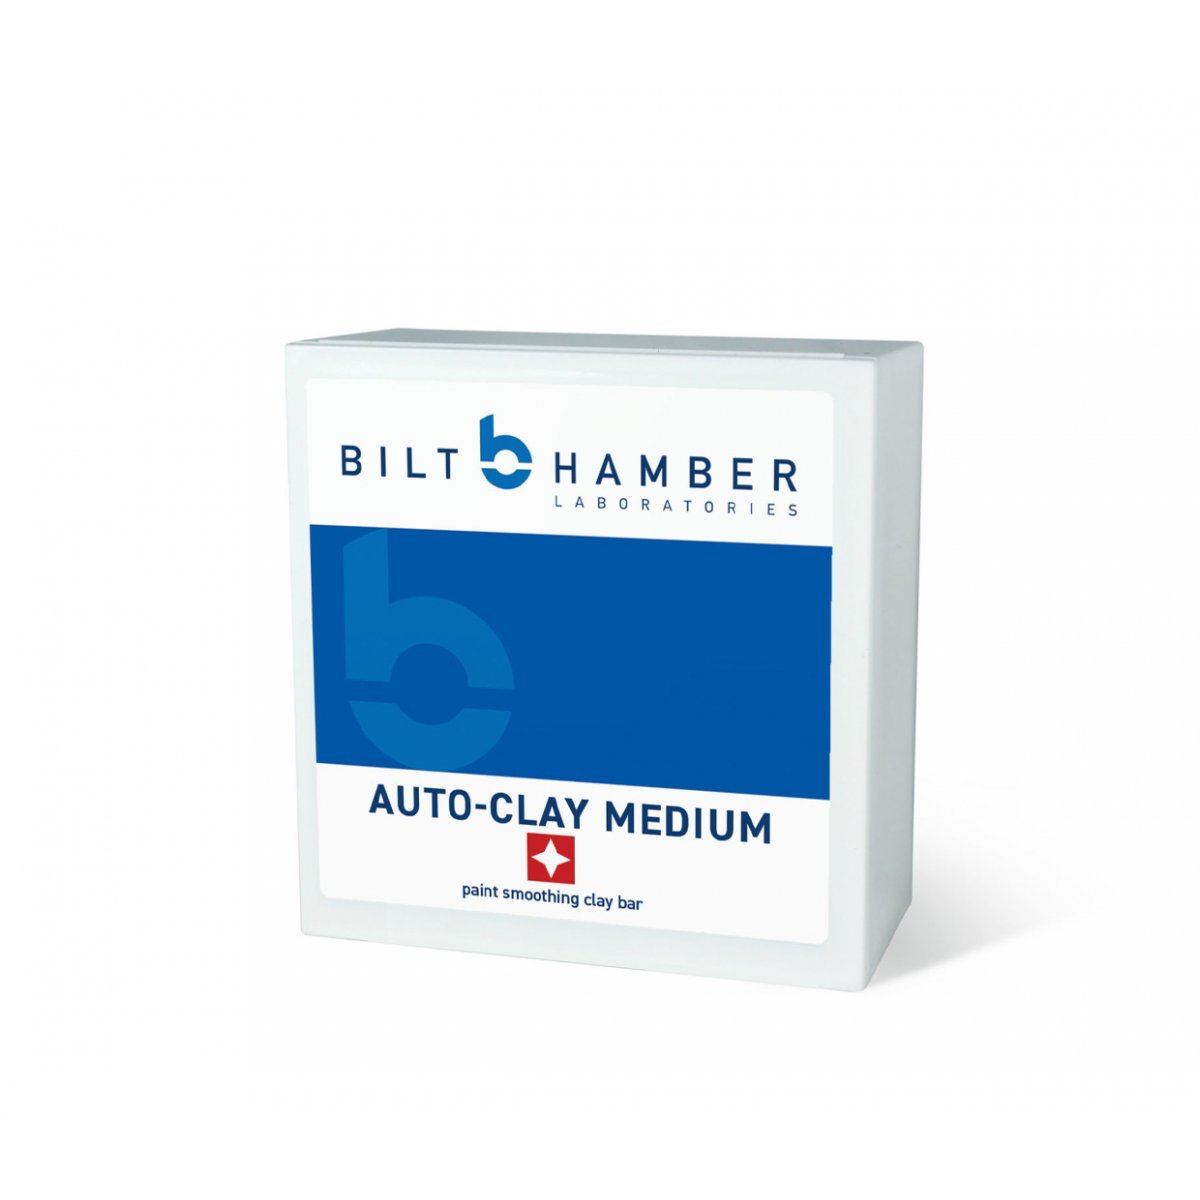 BILT HAMBER AUTO-CLAY MEDIUM  - 200G